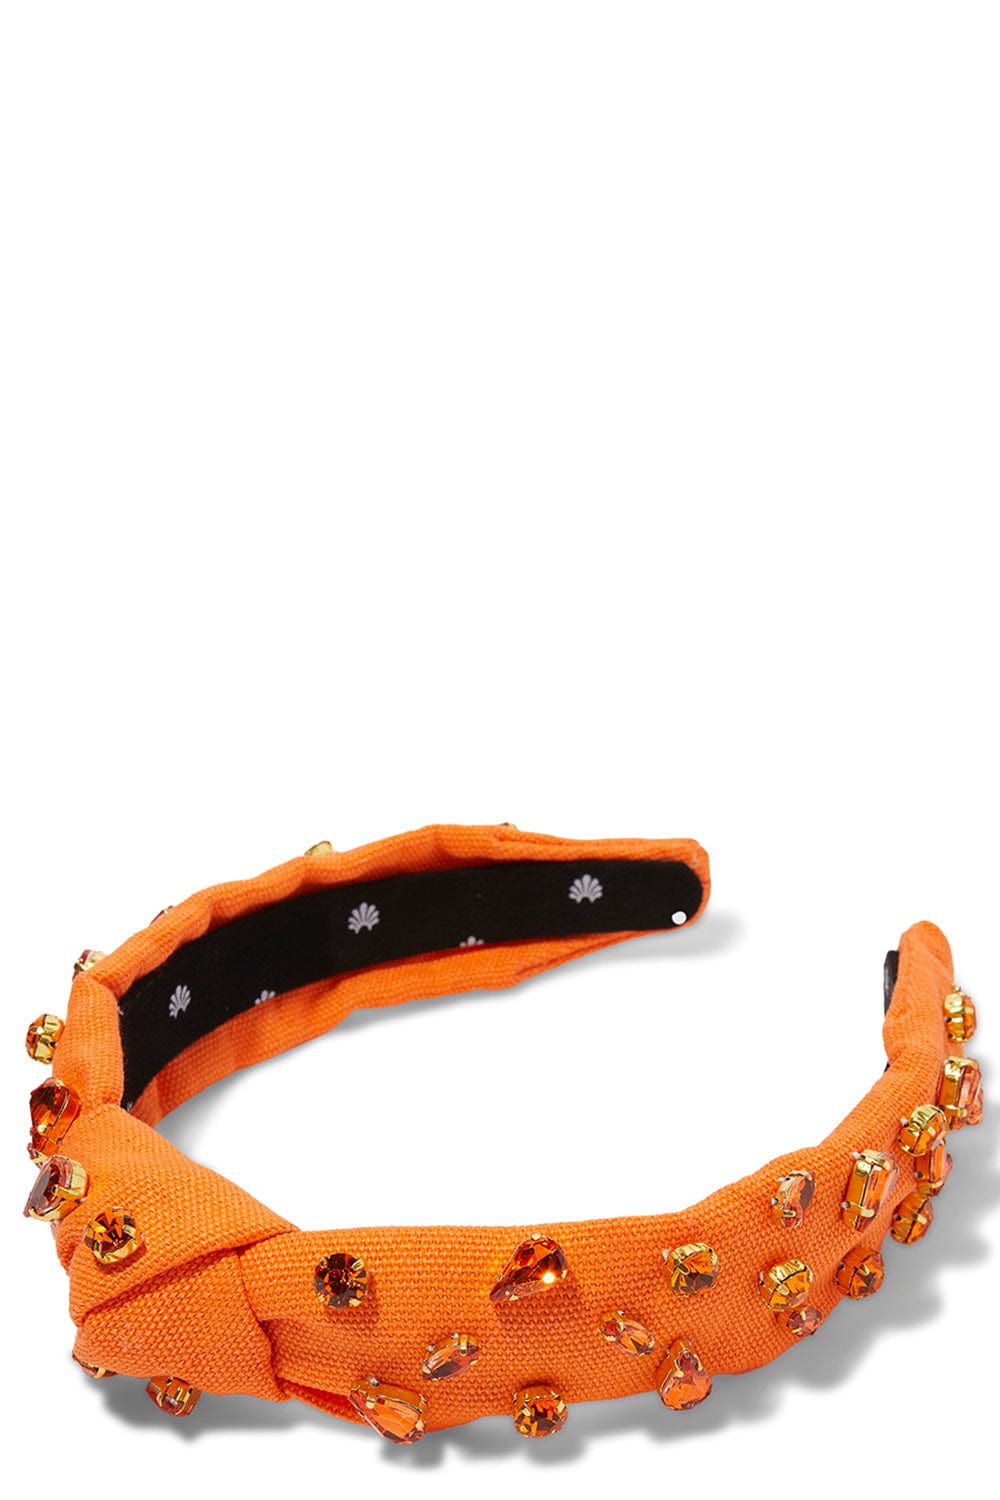 LELE SADOUGHI DESIGNS-Jeweled Knotted Headband - Tangerine-TANGERINE